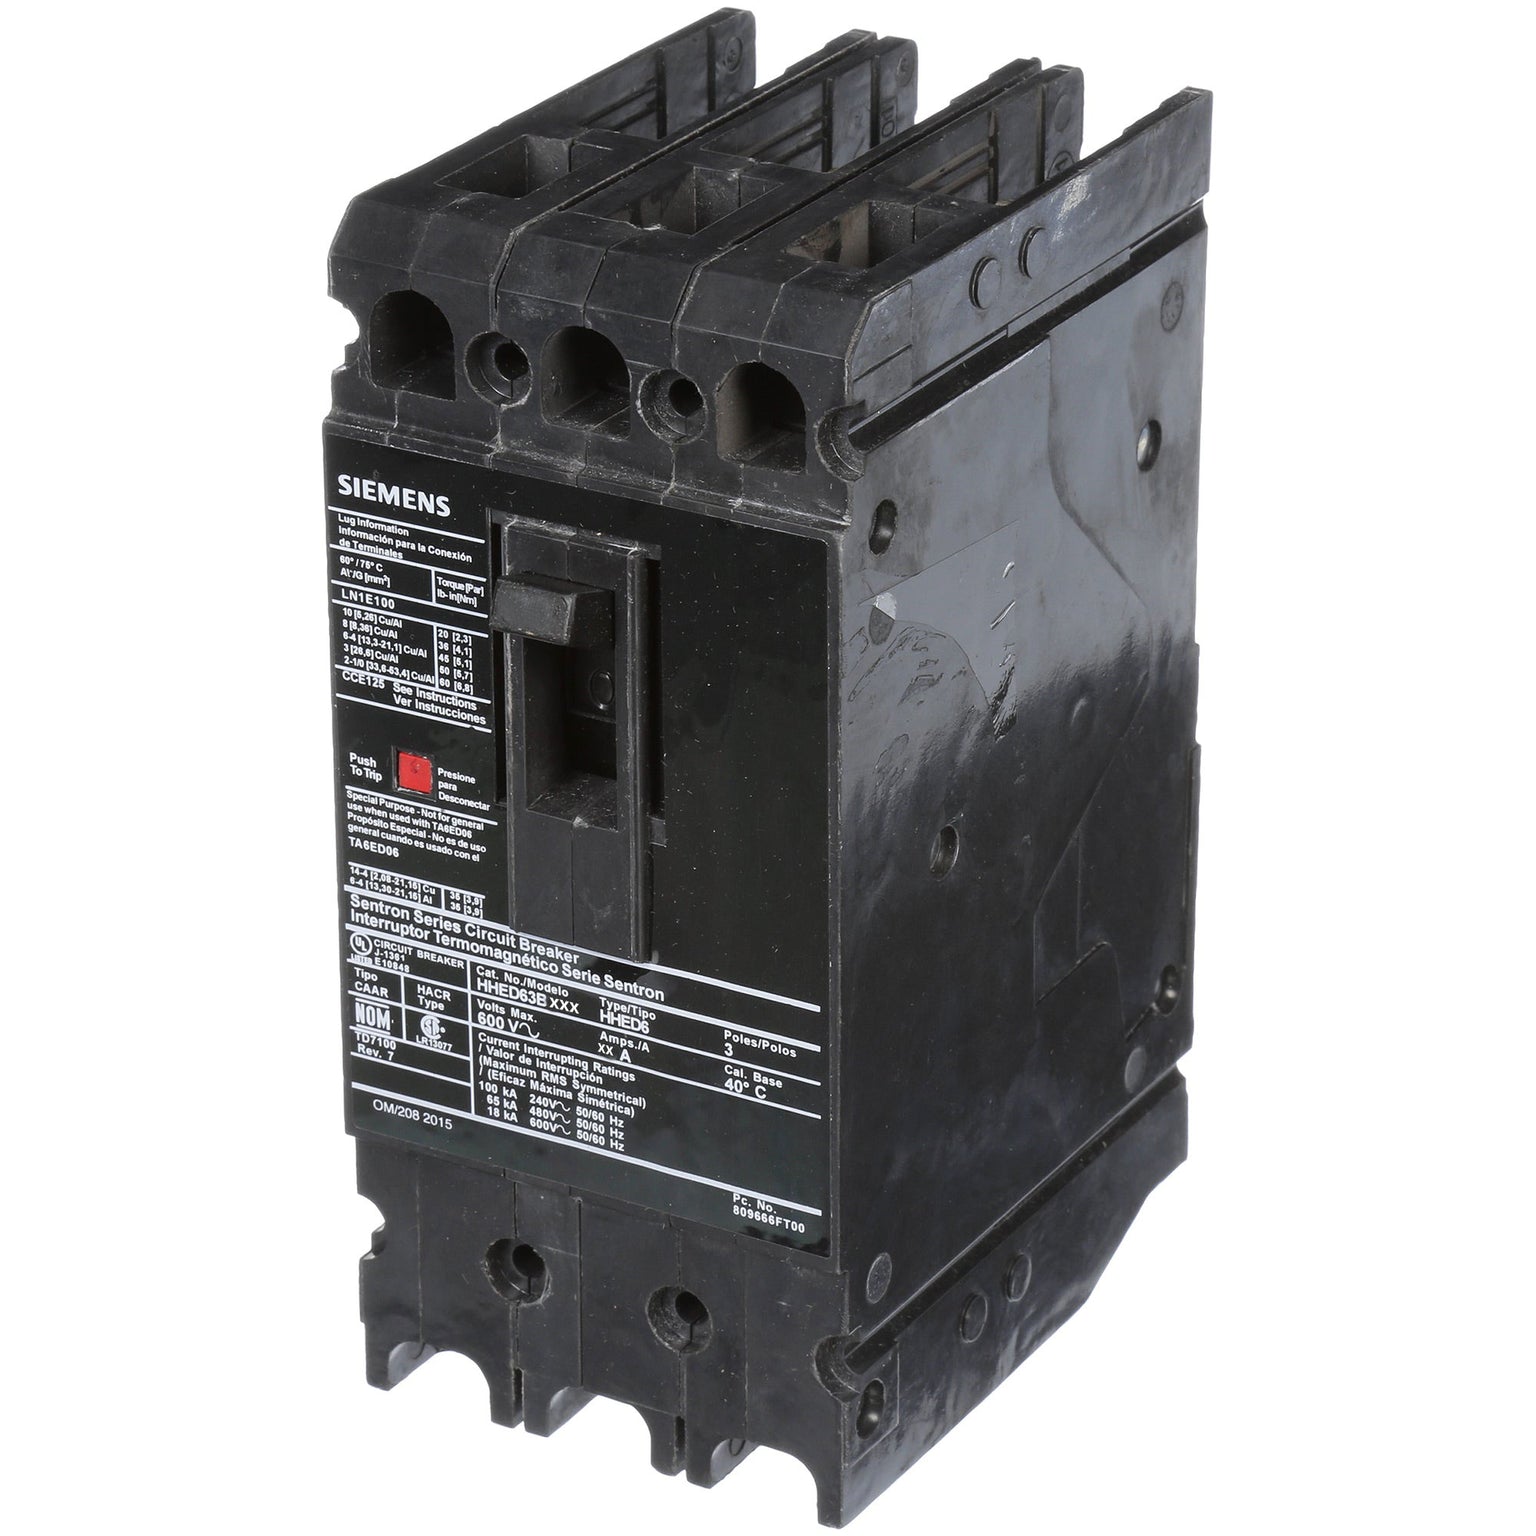 HHED63B050L - Siemens - 50 Amp Molded Case Circuit Breaker